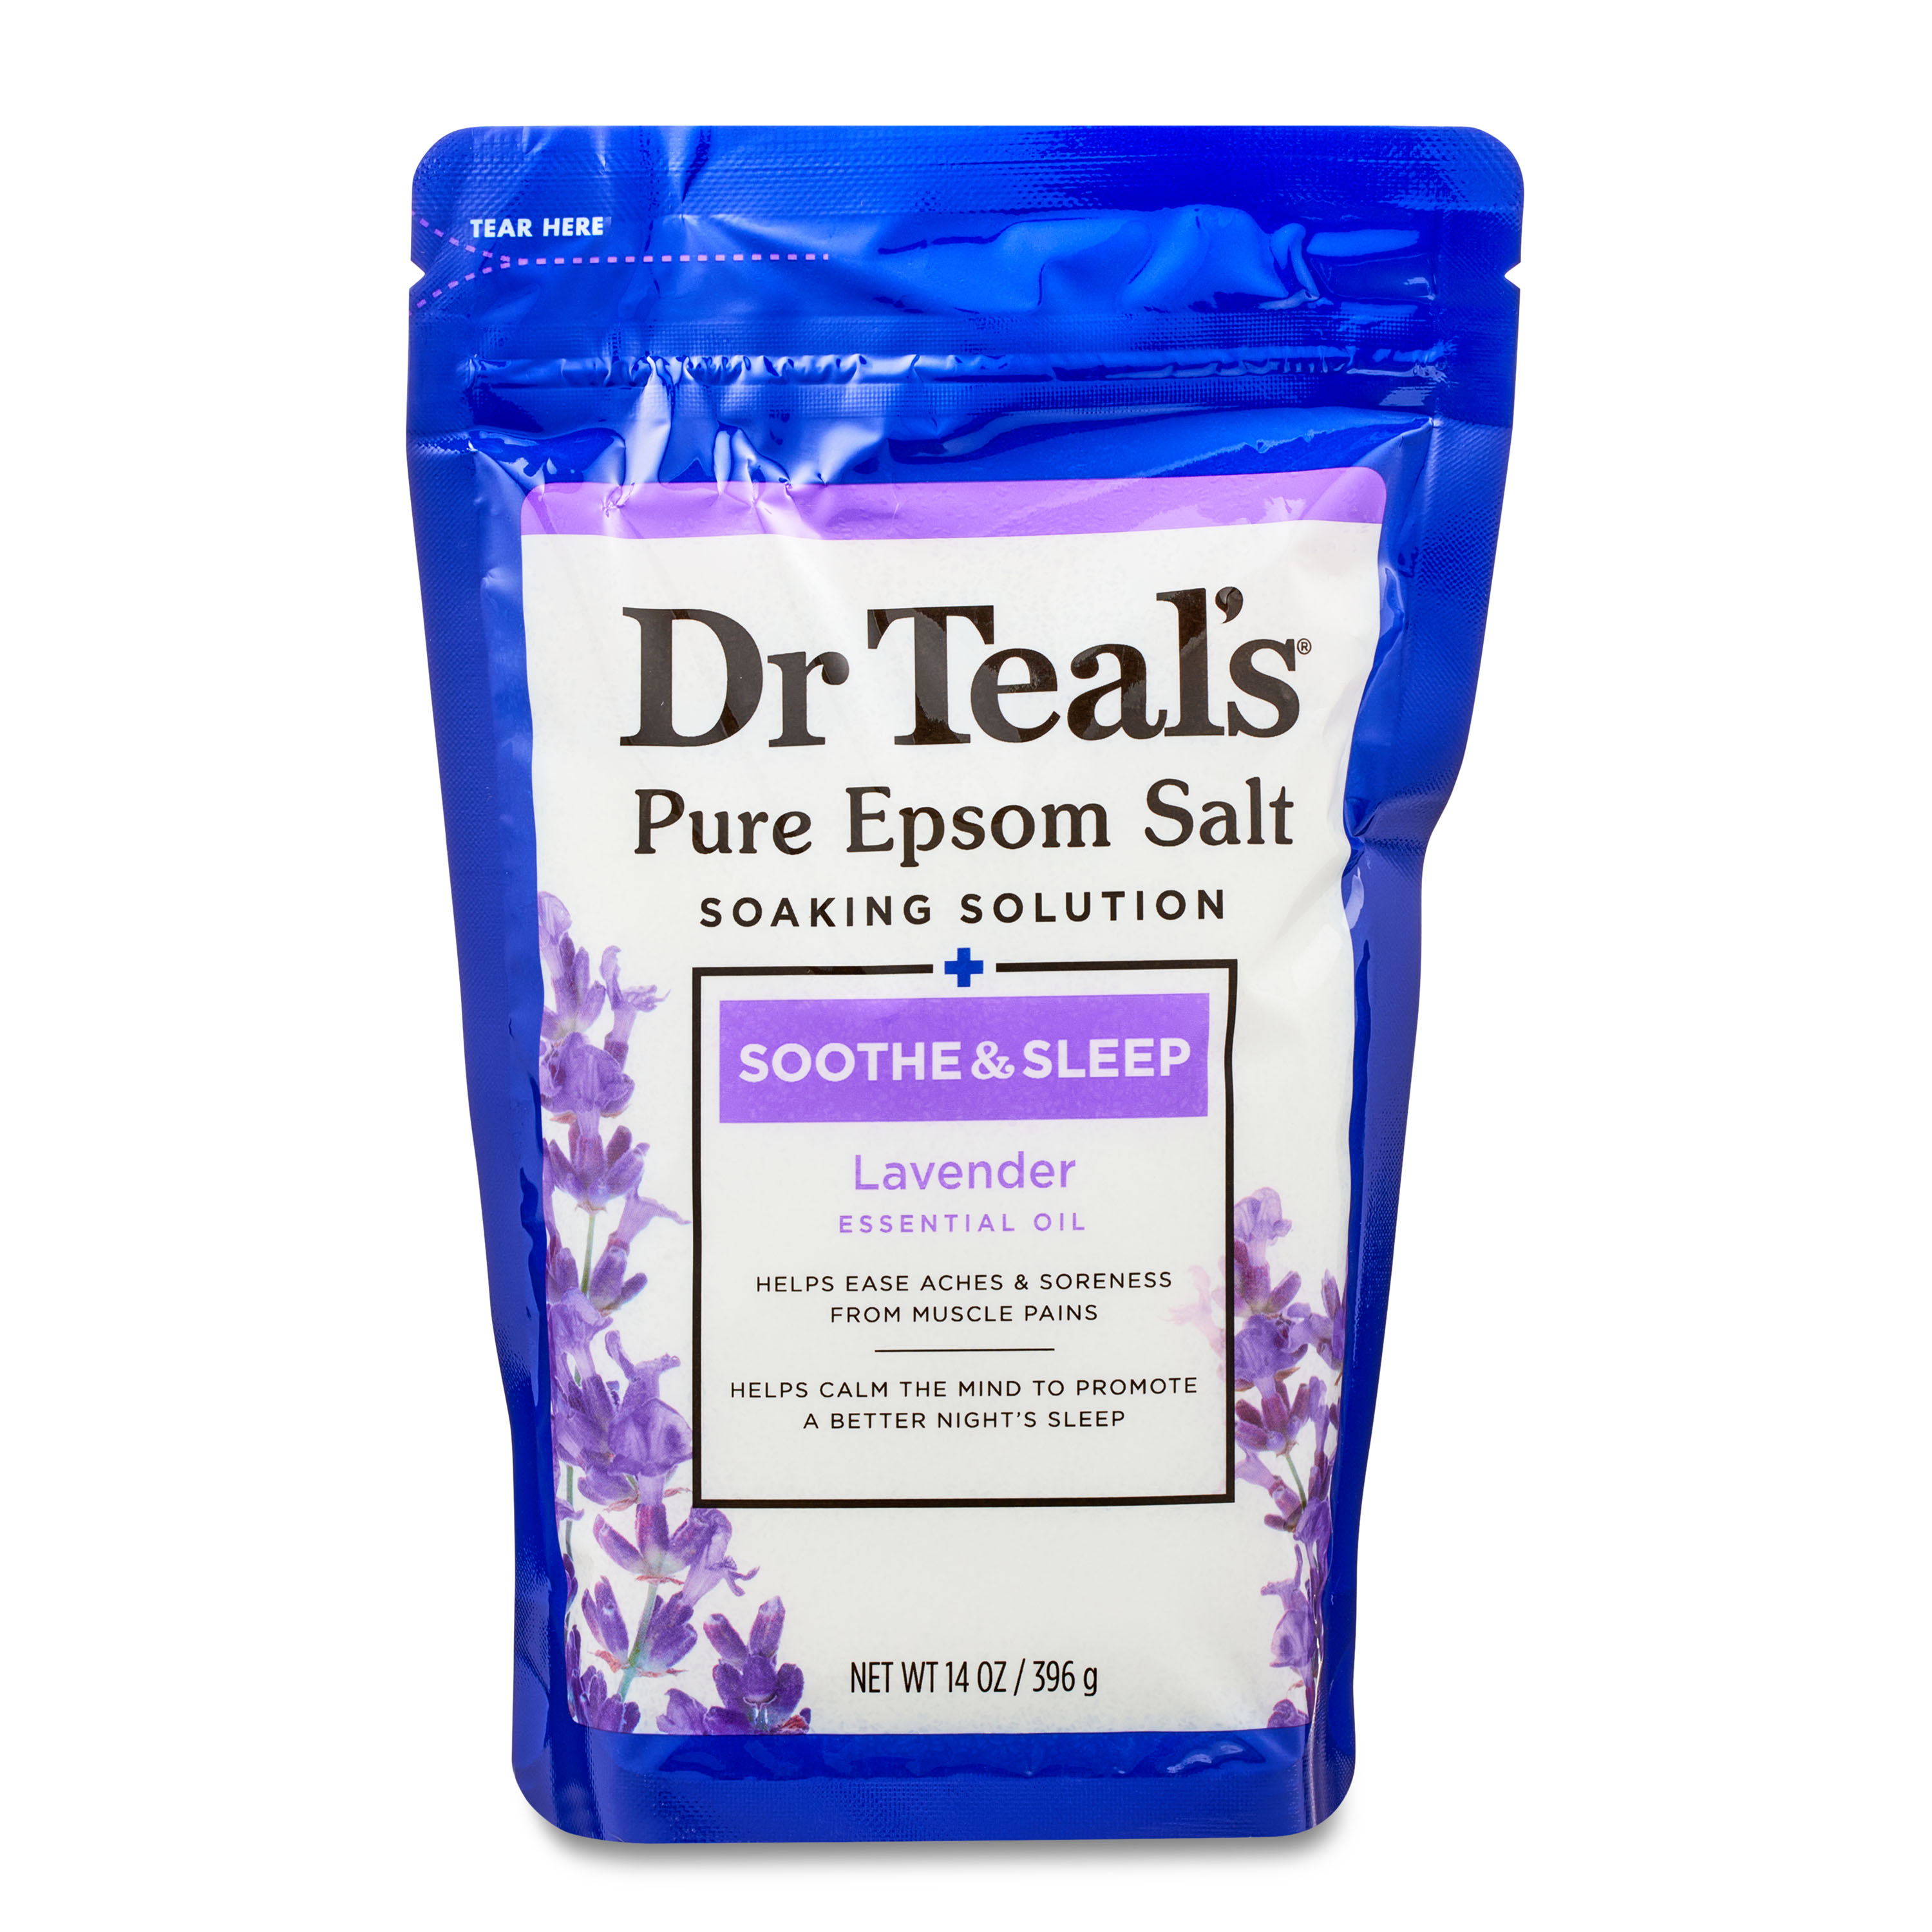 Dr Teal’s Soothe & Sleep Gift Set, Lavender, 5 Piece - image 2 of 5